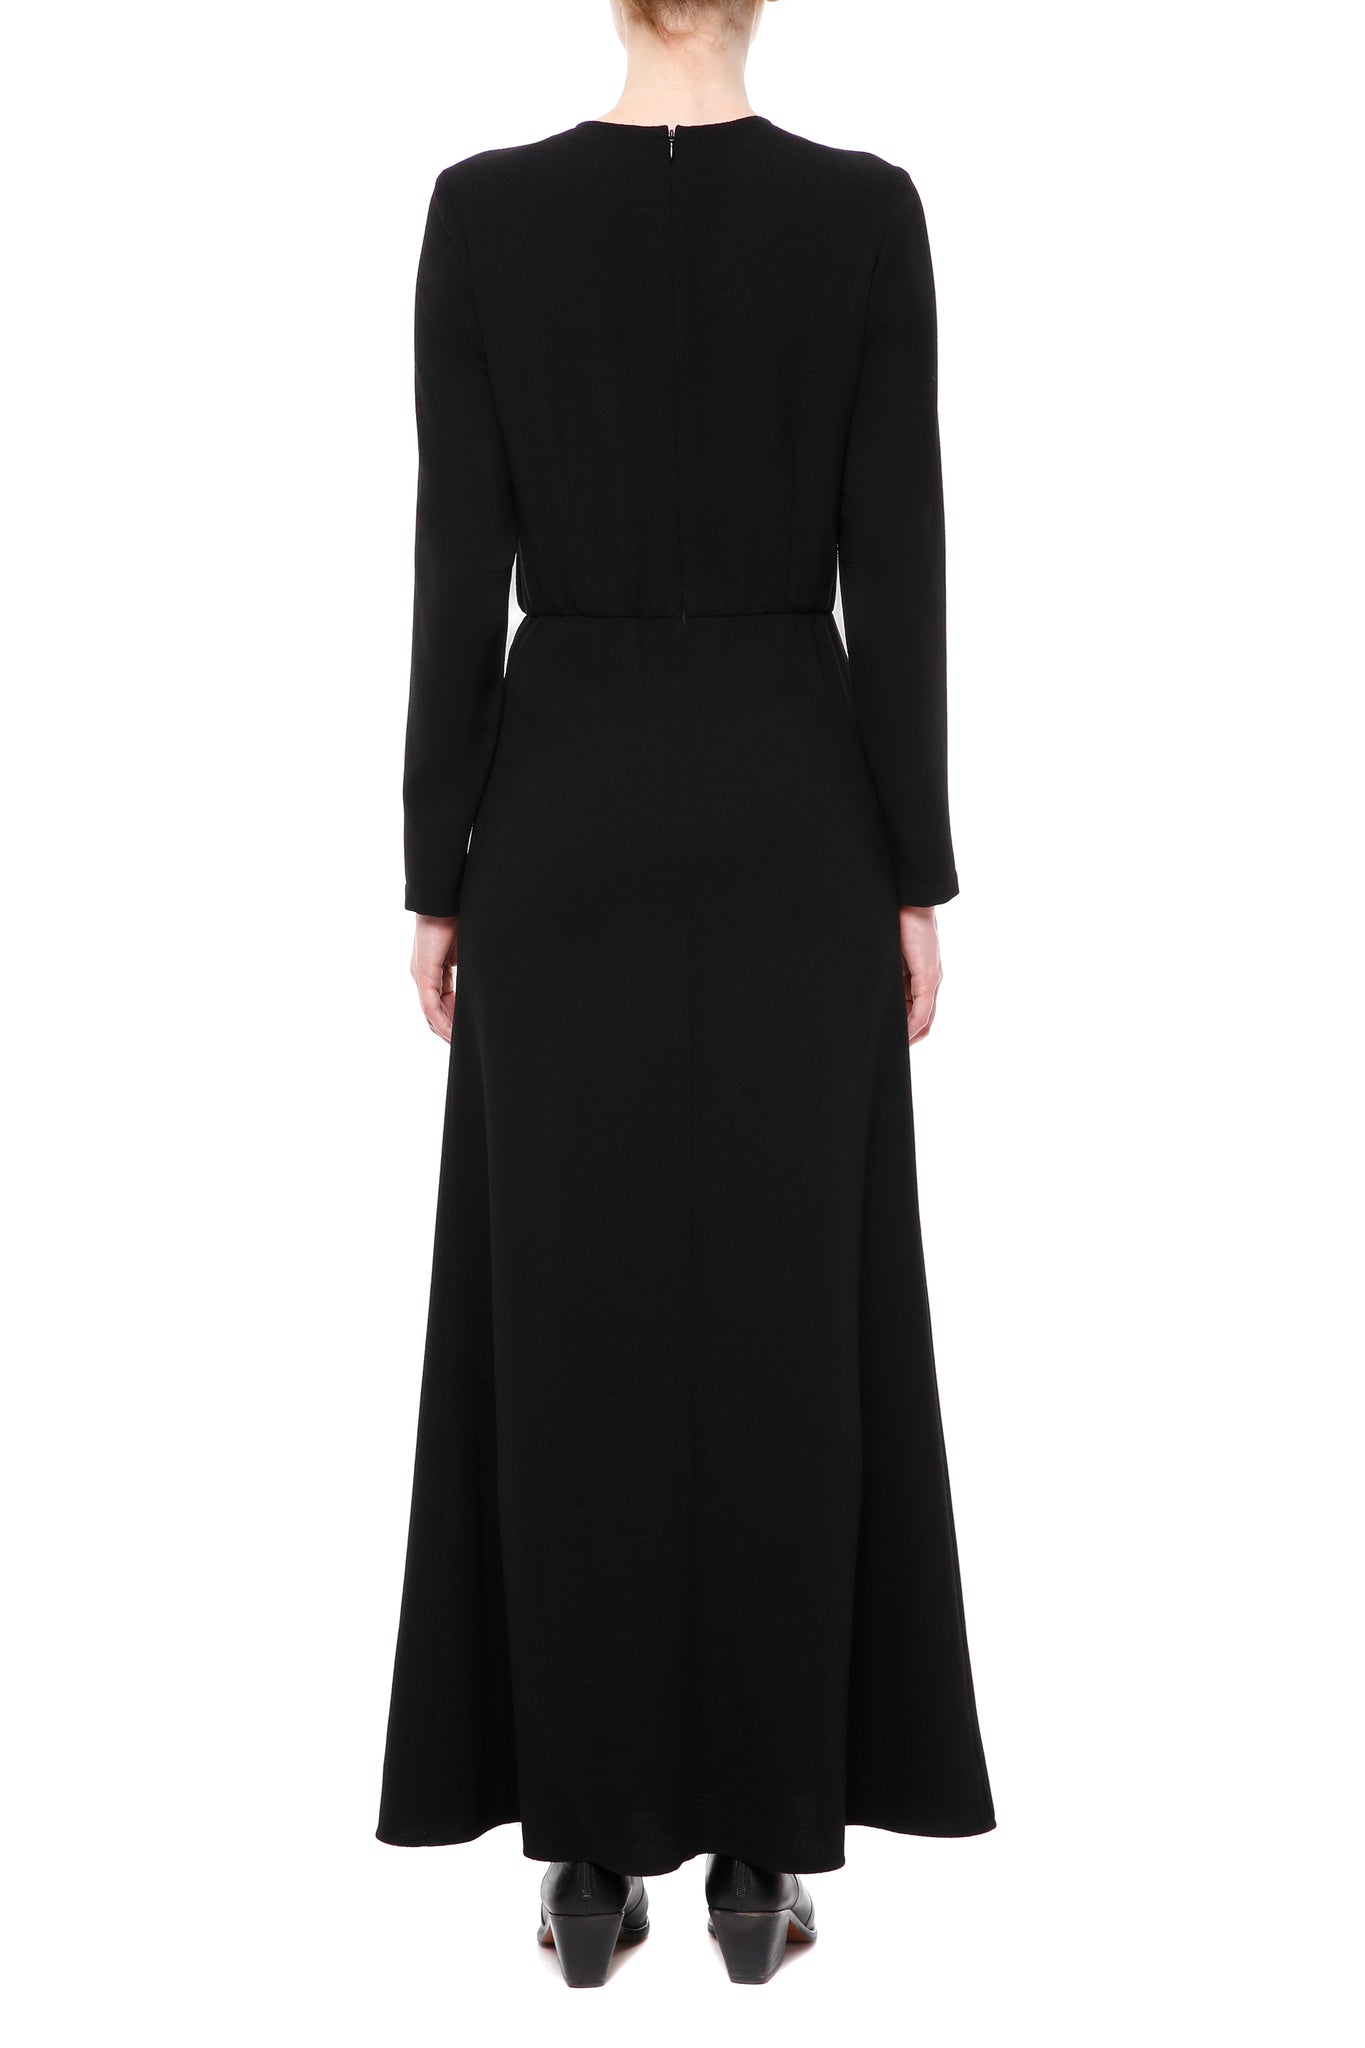 Black maxi dress